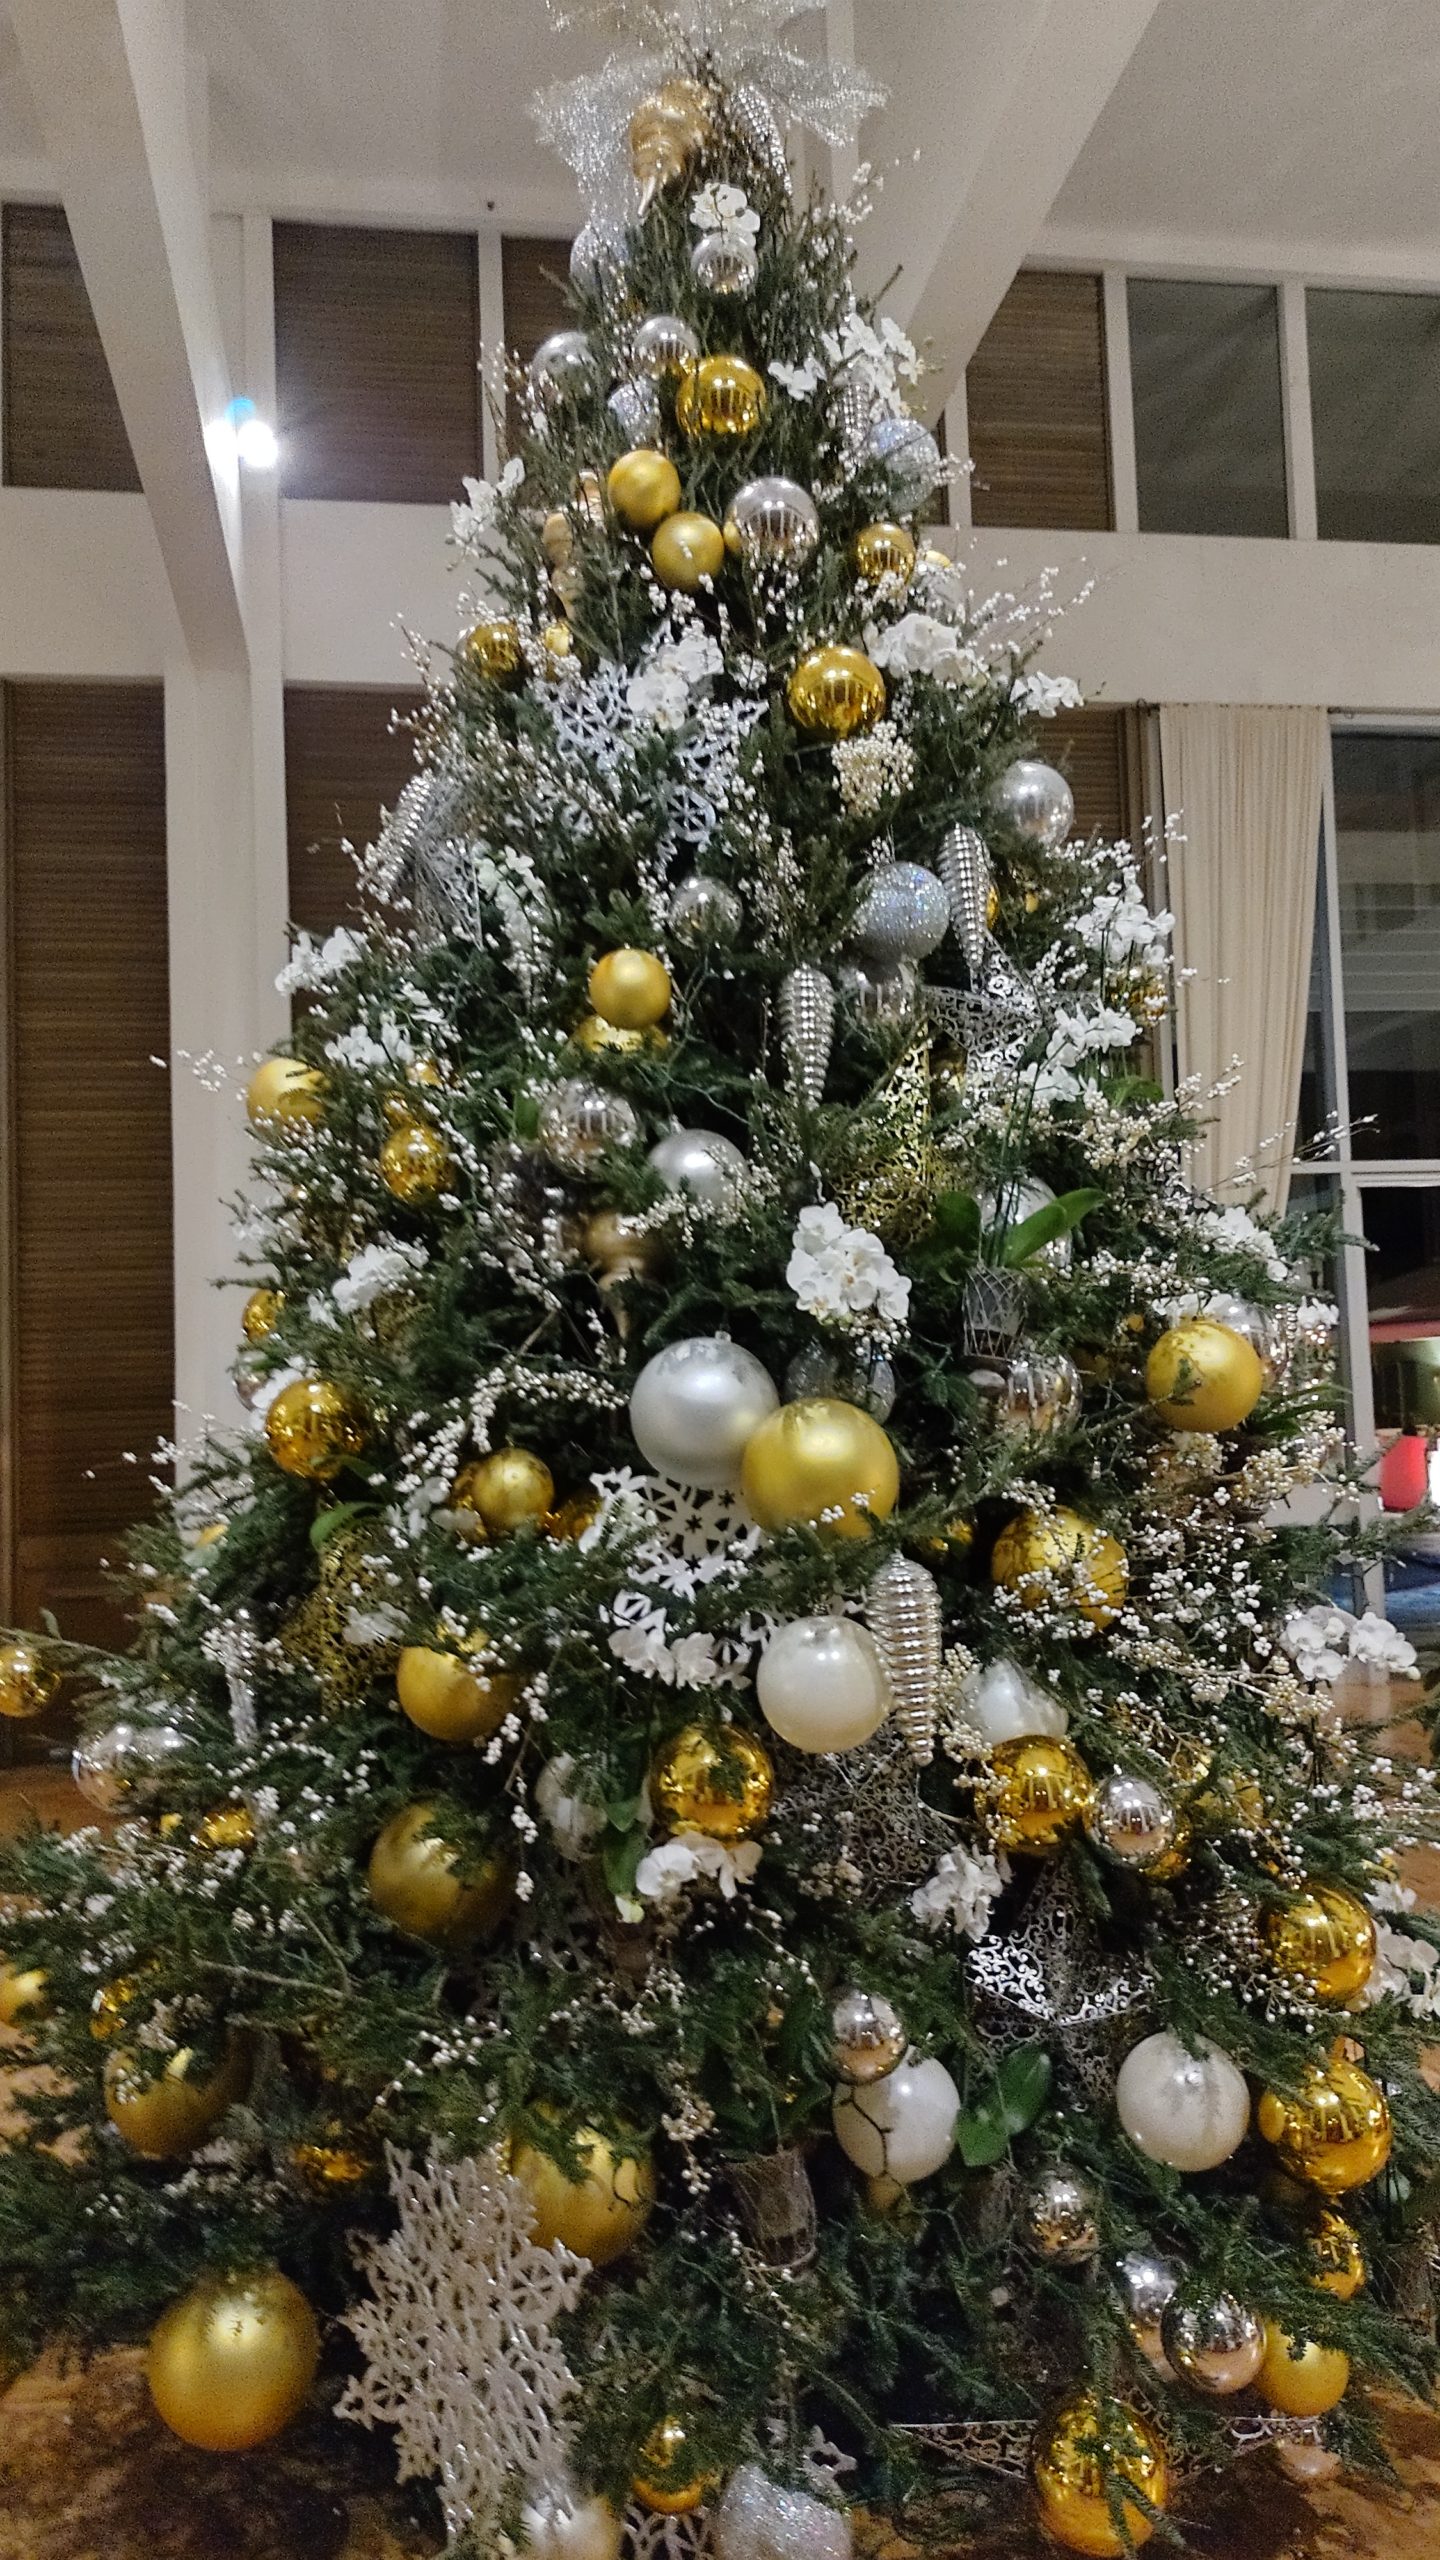 The Christmas tree in the Lobby area of the Veranda.